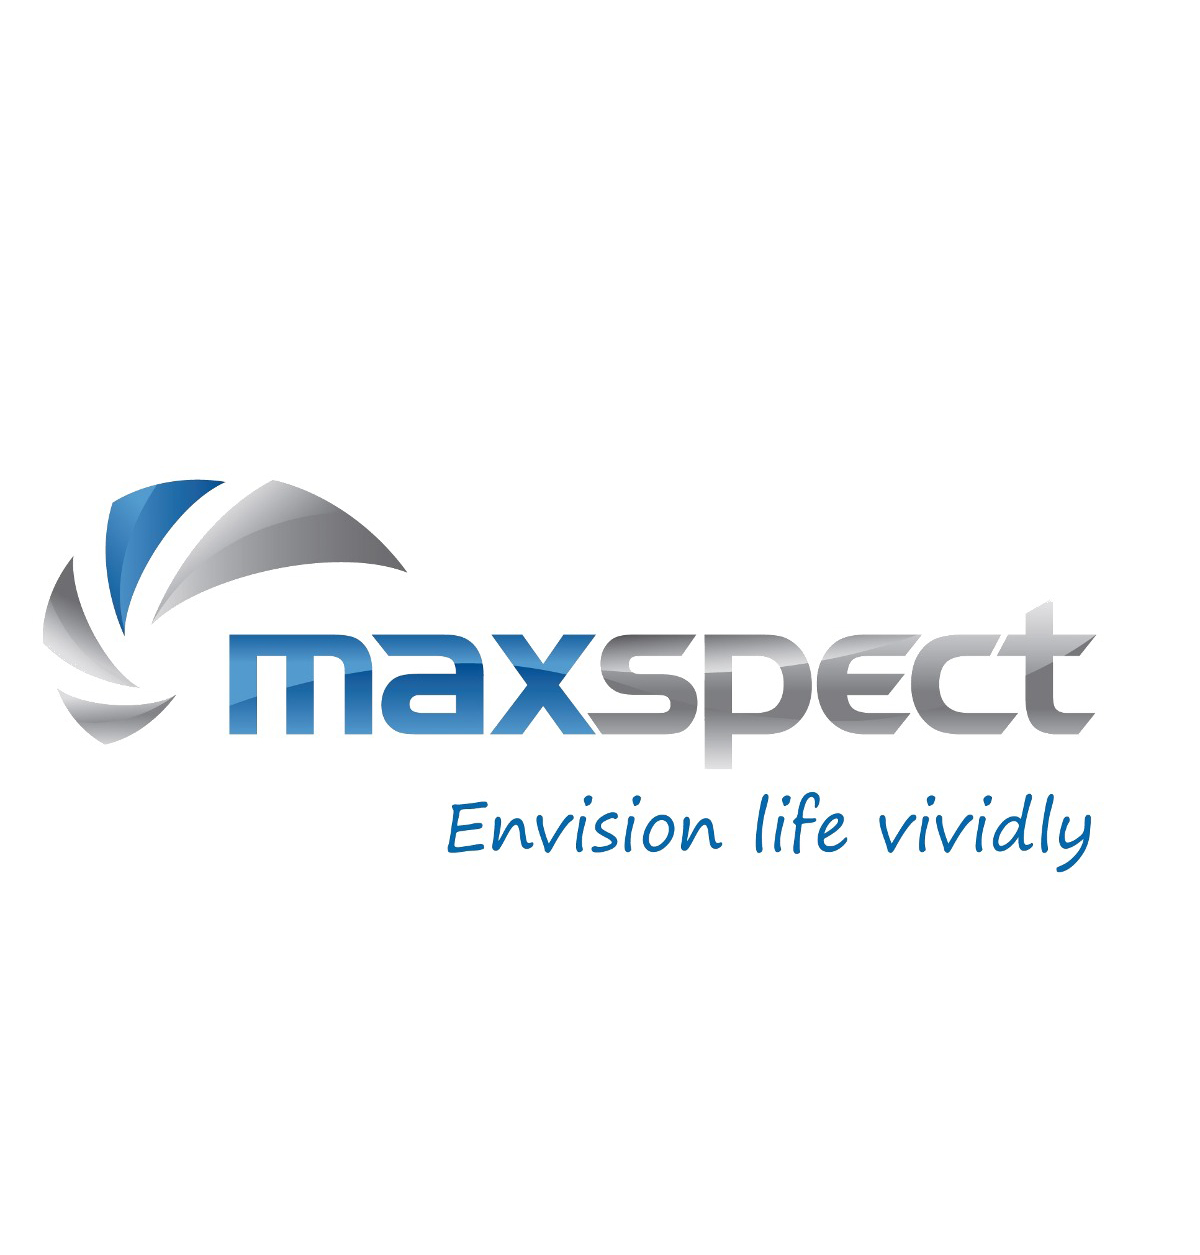 {40B48C5E-836A-49C0-97C4-5A60987DC341}_Maxspect logo